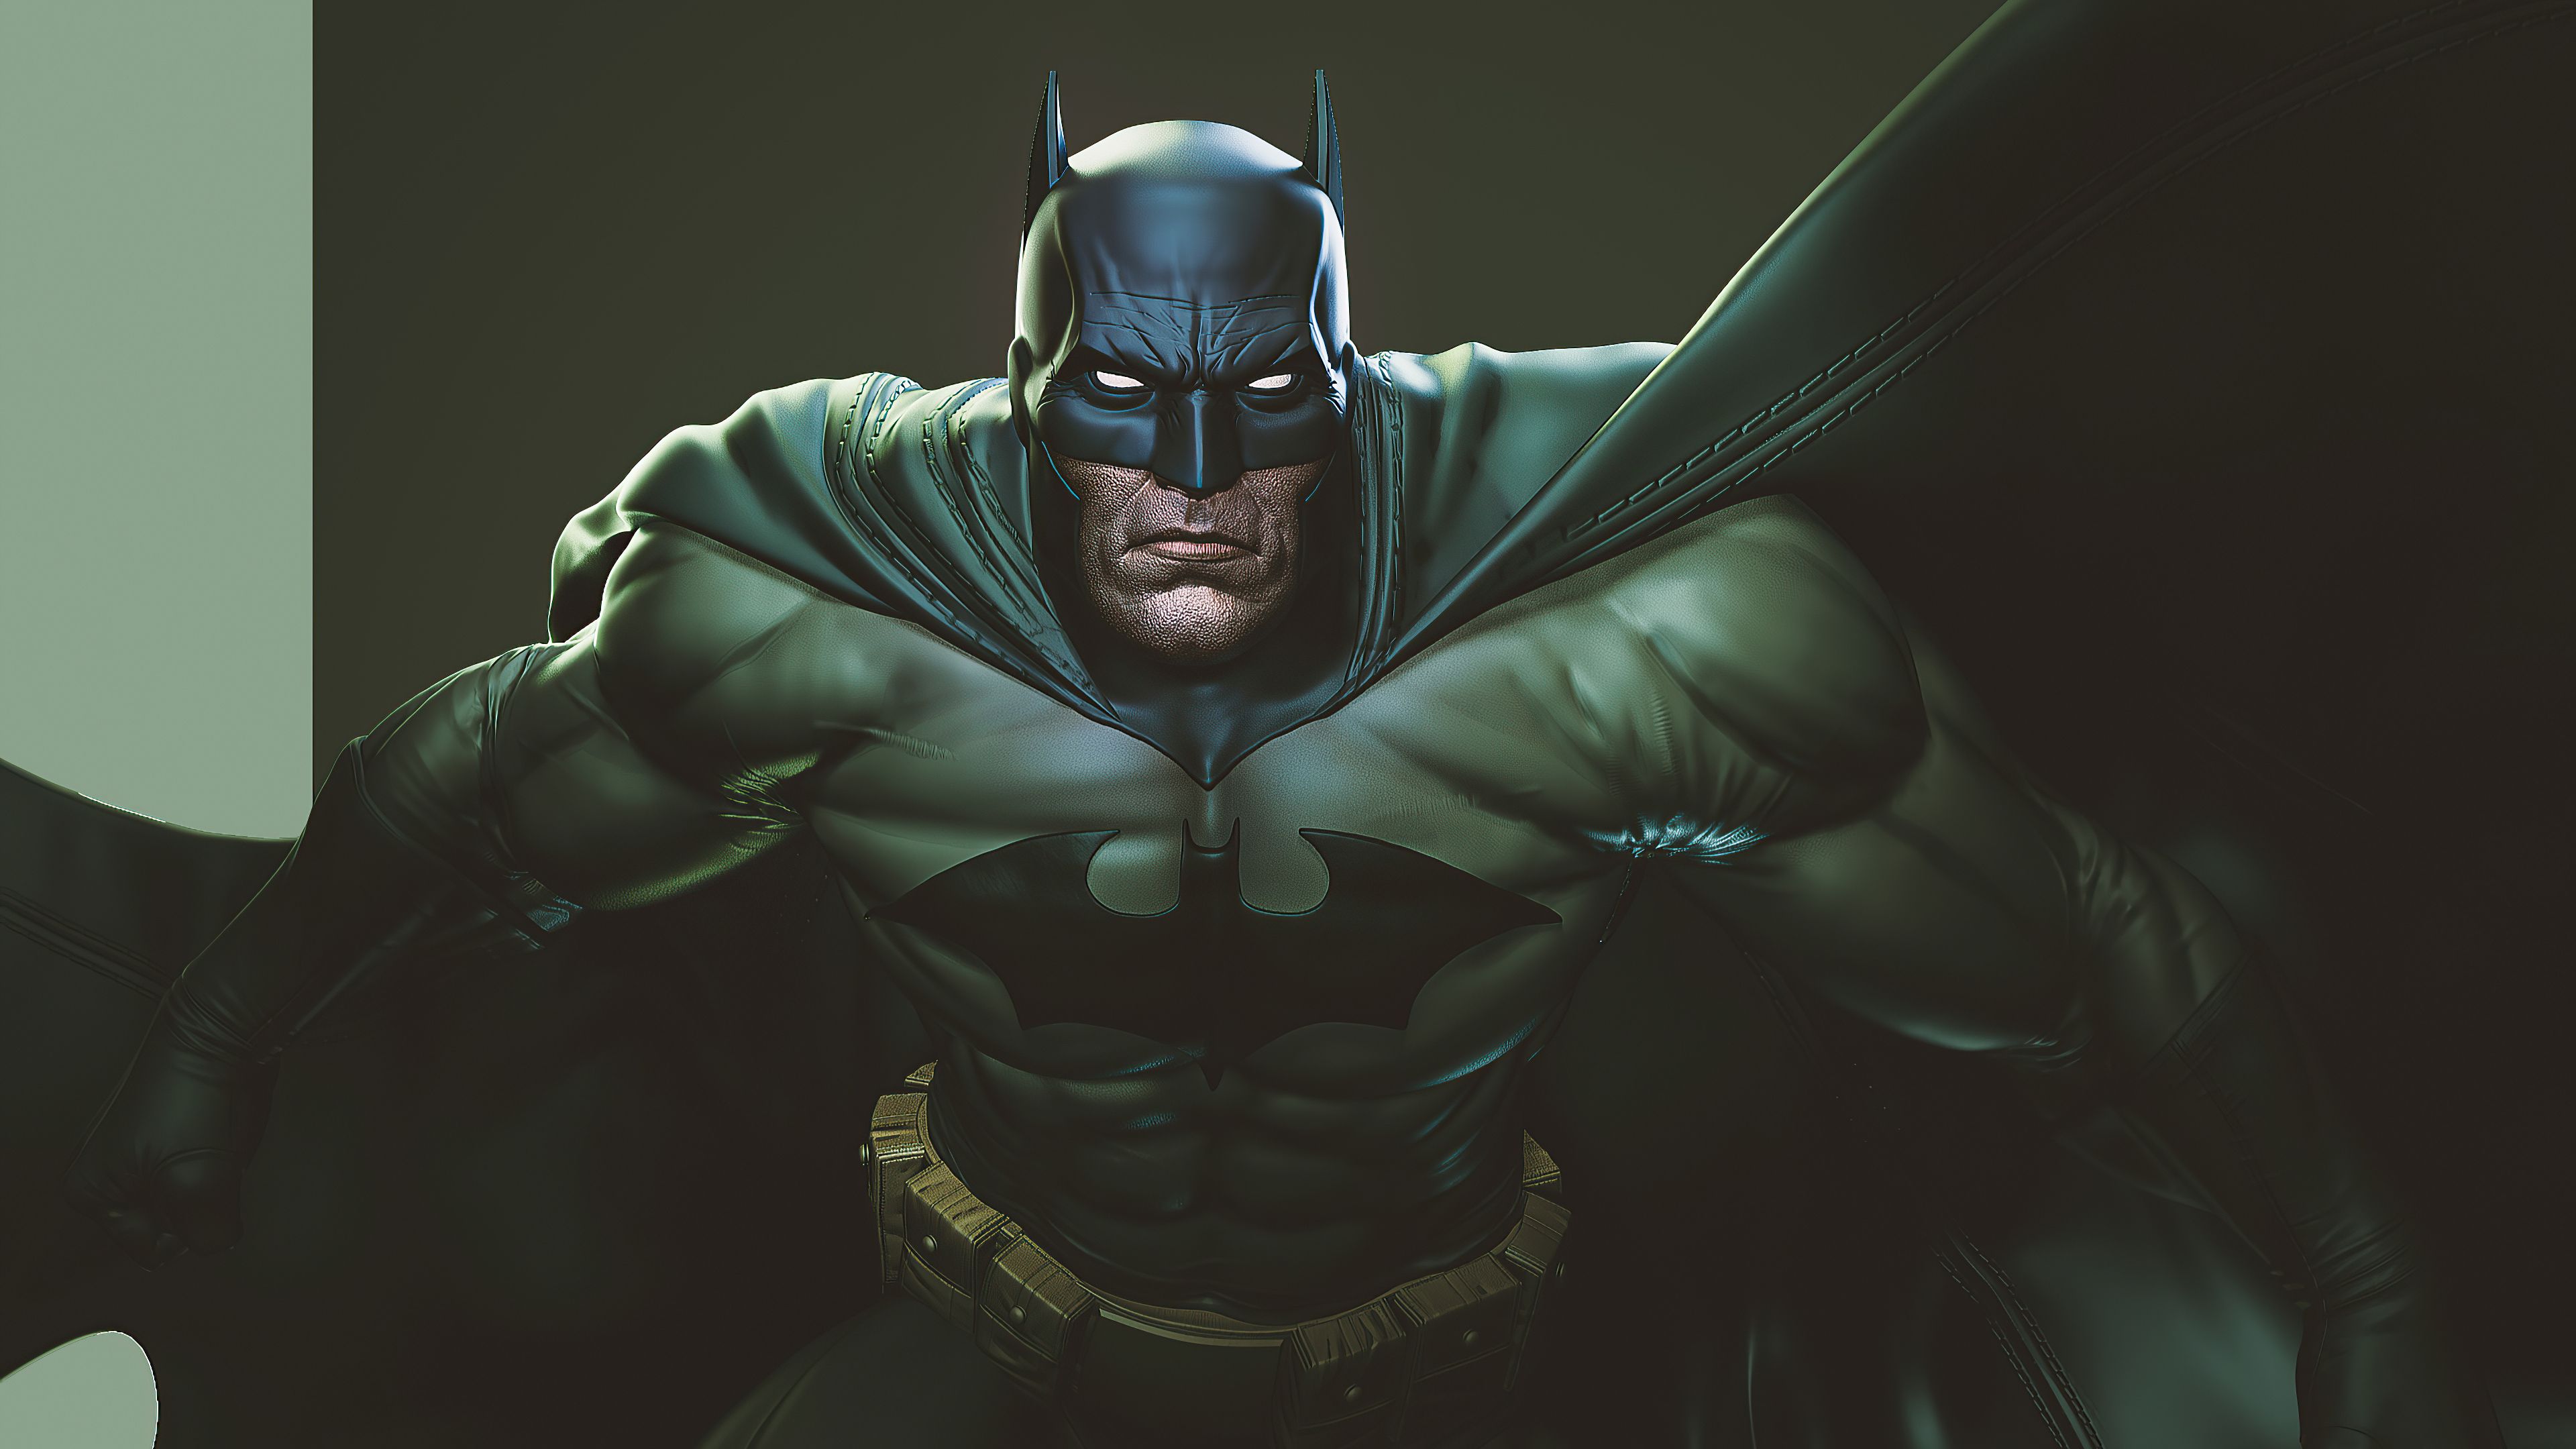 Green Batman DC Comic Wallpaper, HD Superheroes 4K Wallpaper, Image, Photo and Background